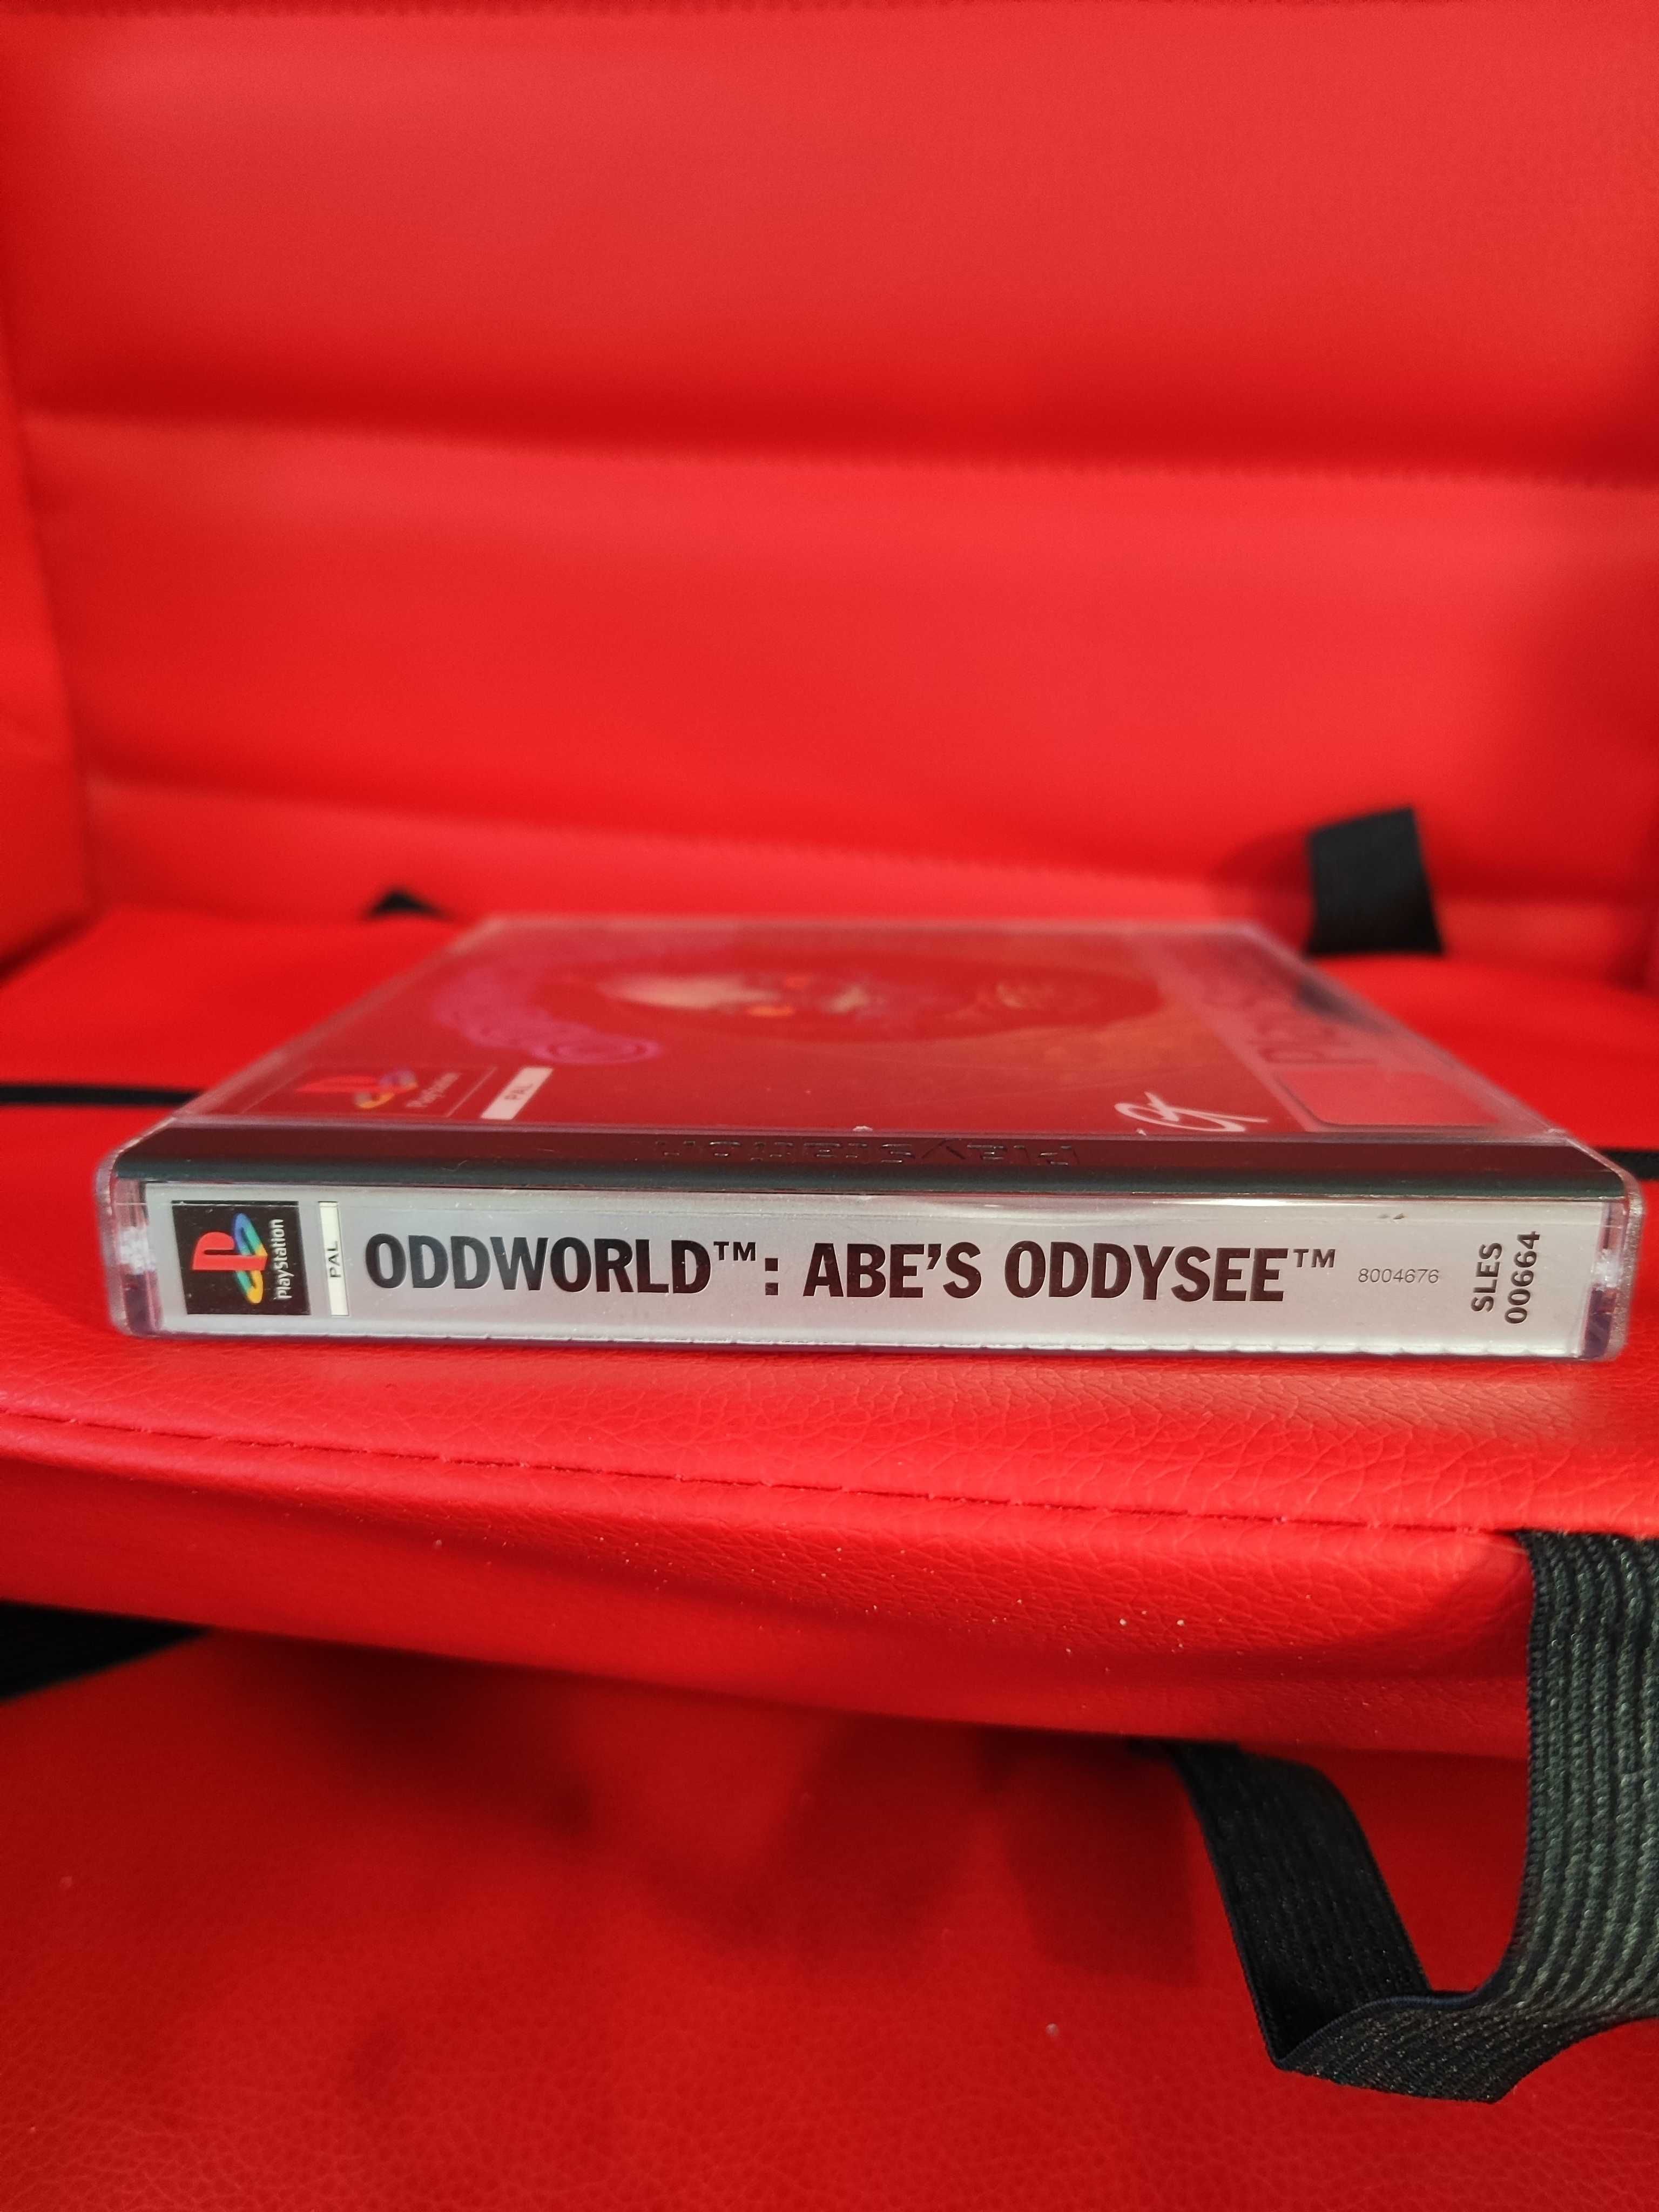 Oddworld abe's oddysee PSX, super stan